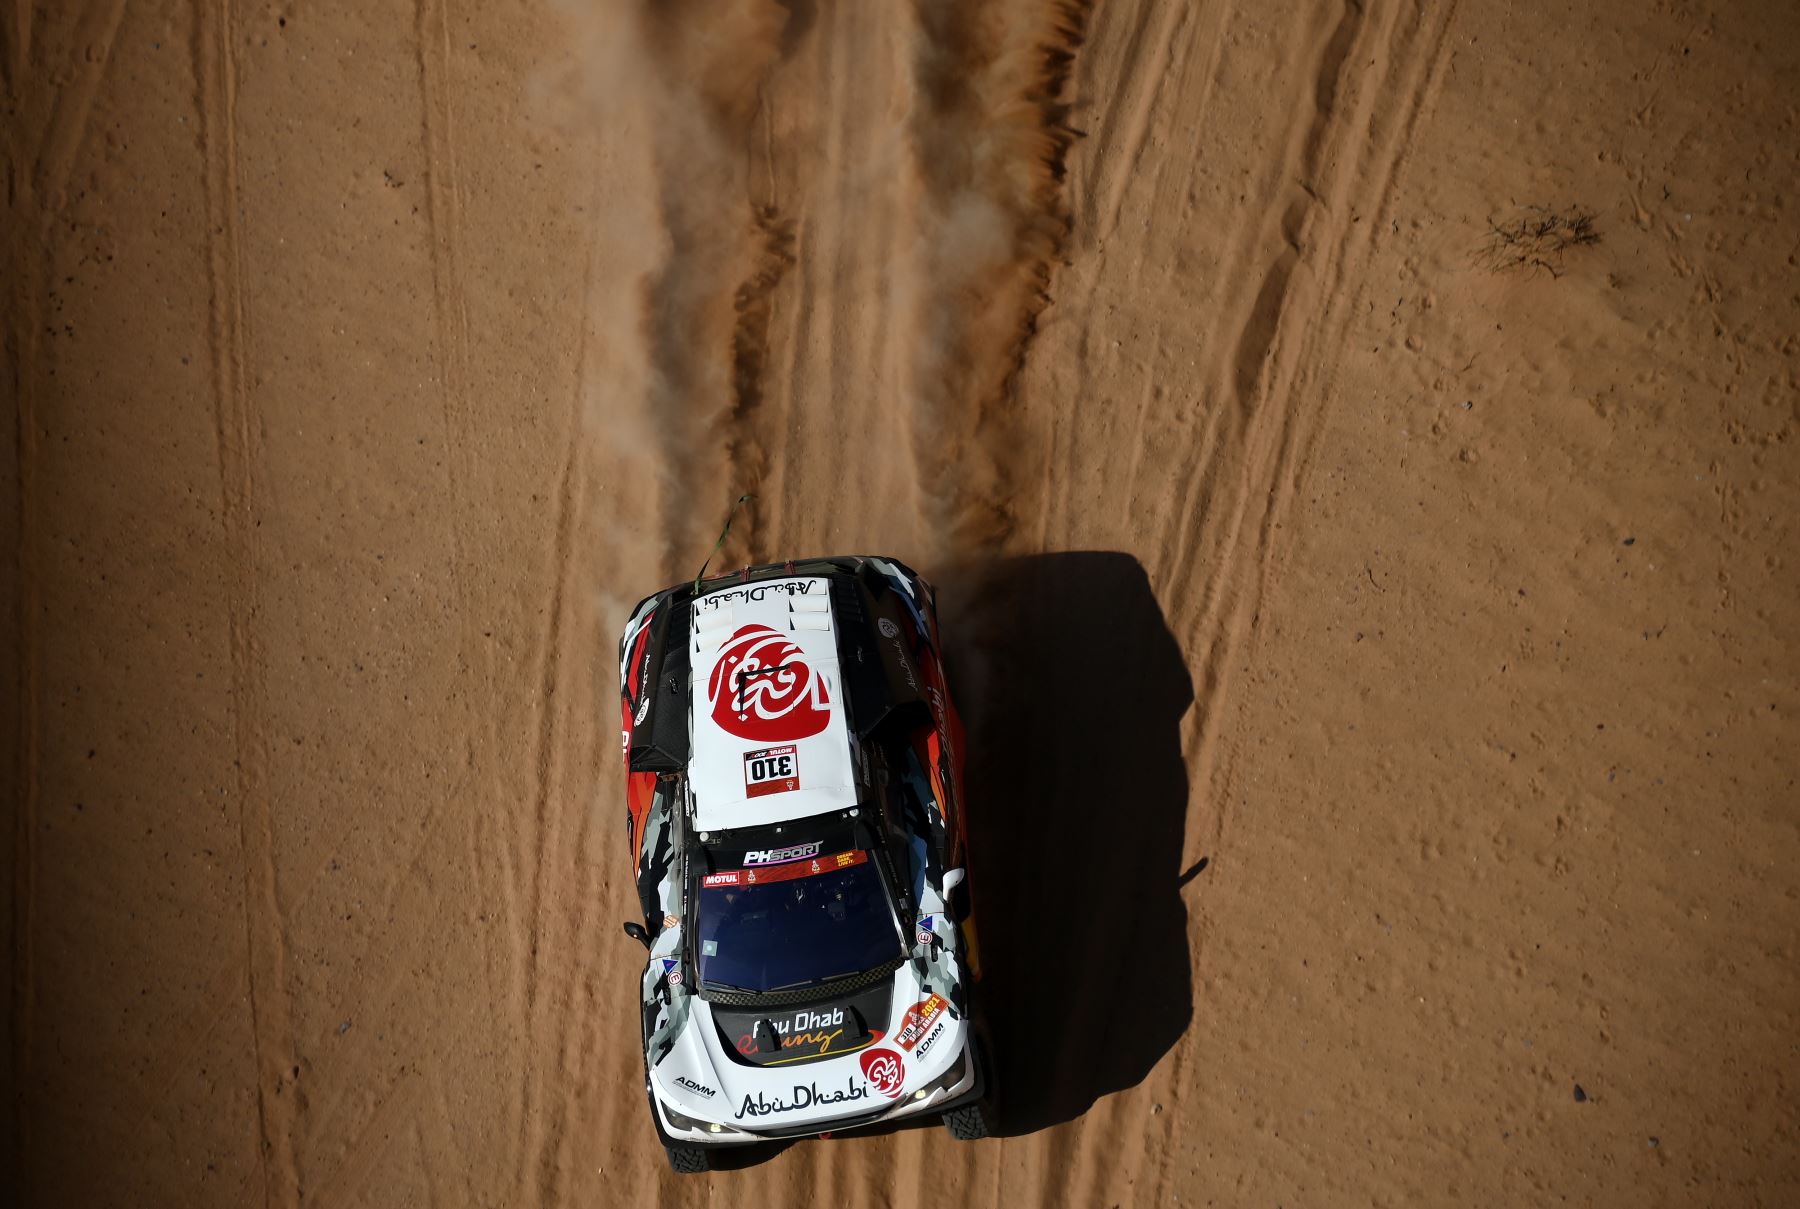 El piloto de Peugeot, Khalid Sheikh al-Qassimi de Arabia Saudita y el copiloto Xavier Panseri de Francia compiten durante la etapa 8 del Rally Dakar 2021 entre Sakaka y Neom, en Arabia Saudita. Foto:AFP